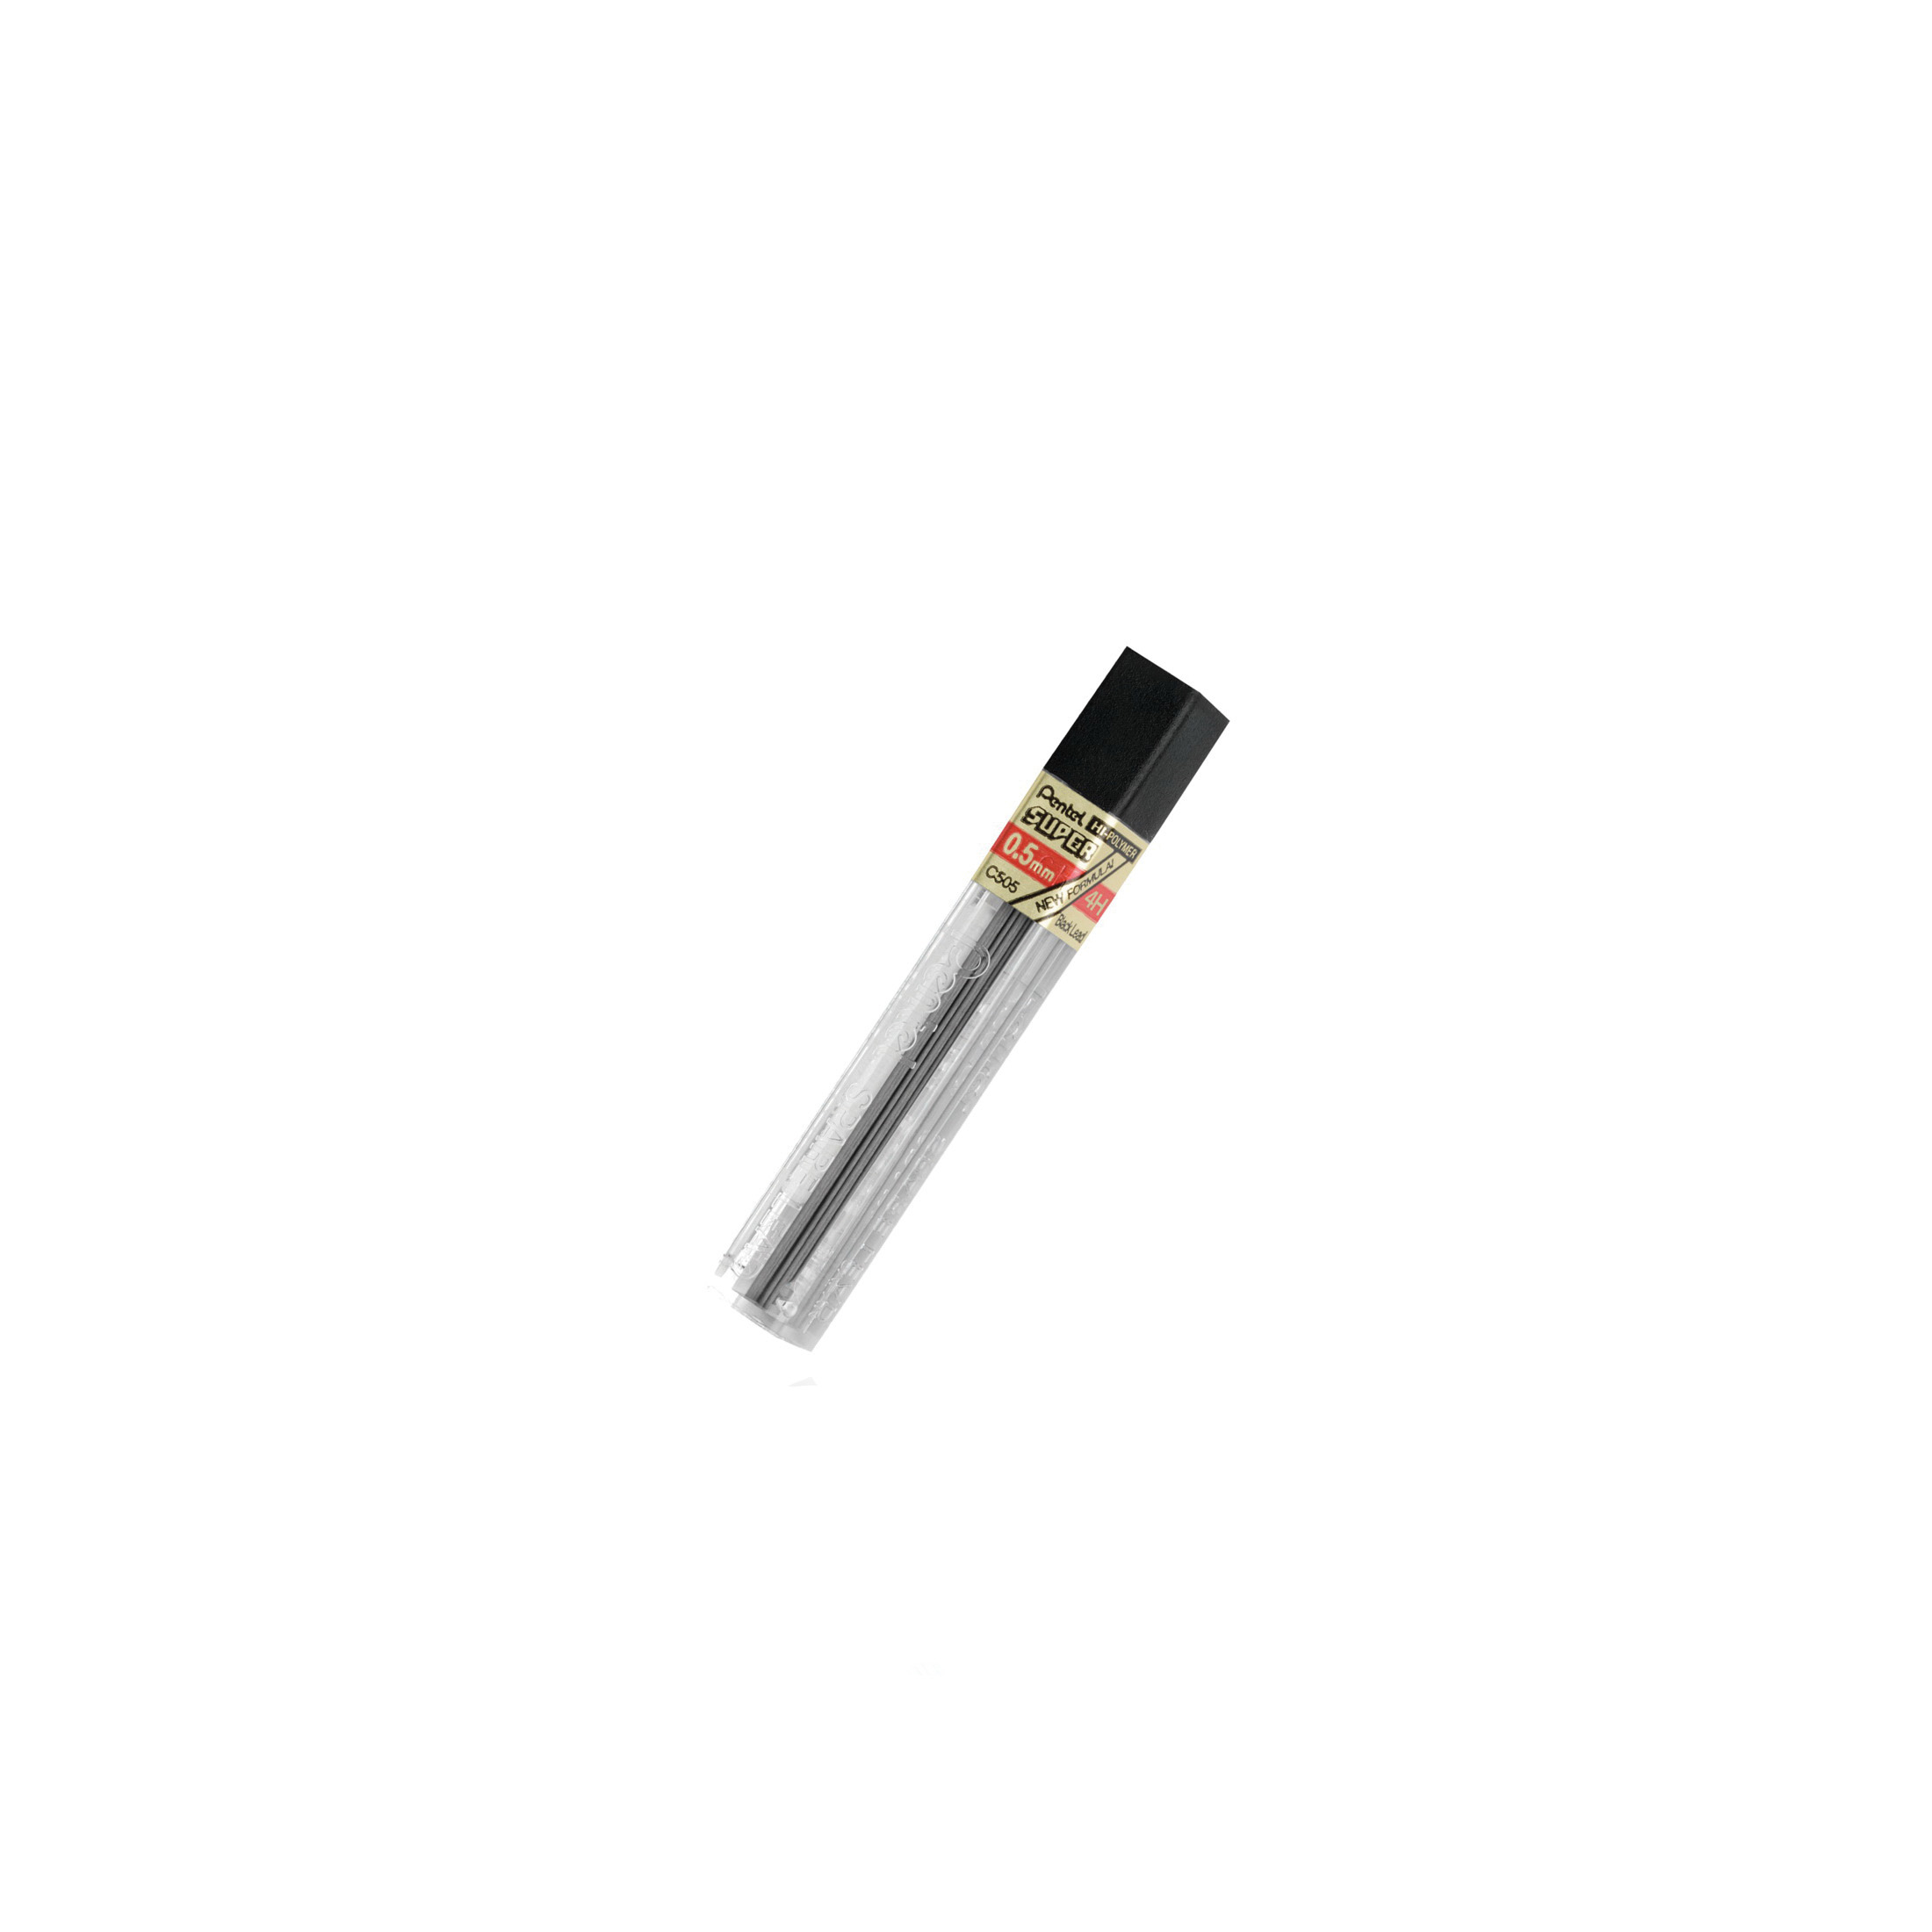 Pentel C505-4H Pencil Lead, 0.5 mm Lead, Black, 4H Lead - 1